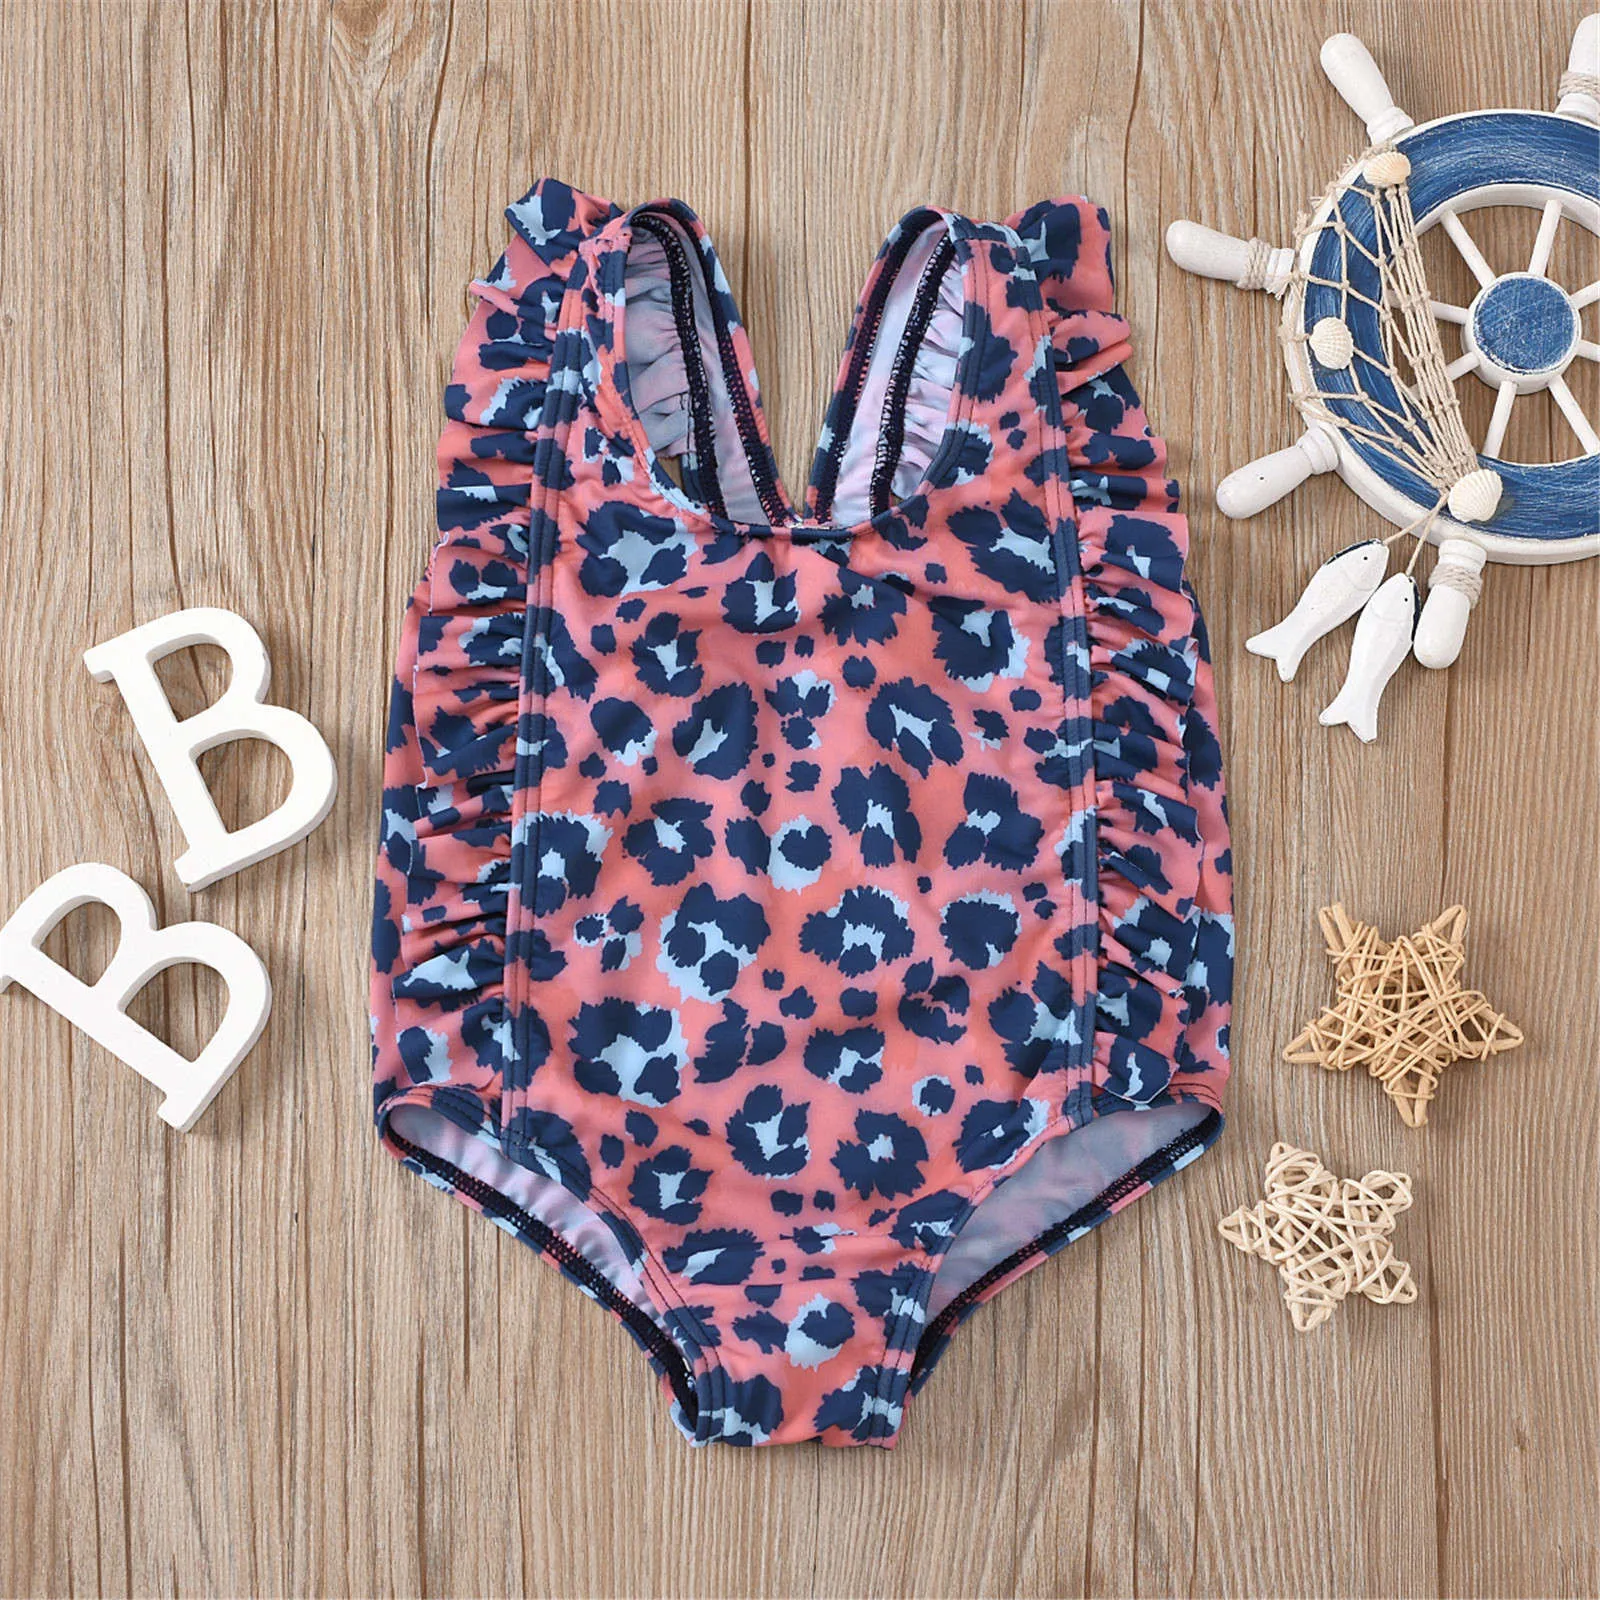 

TELOTUNY Swimwear Summer Baby Kids Girls Leopard Print One Piece Swimwear Bikini Swimsuit 2021Children Monokini Bathing Suit